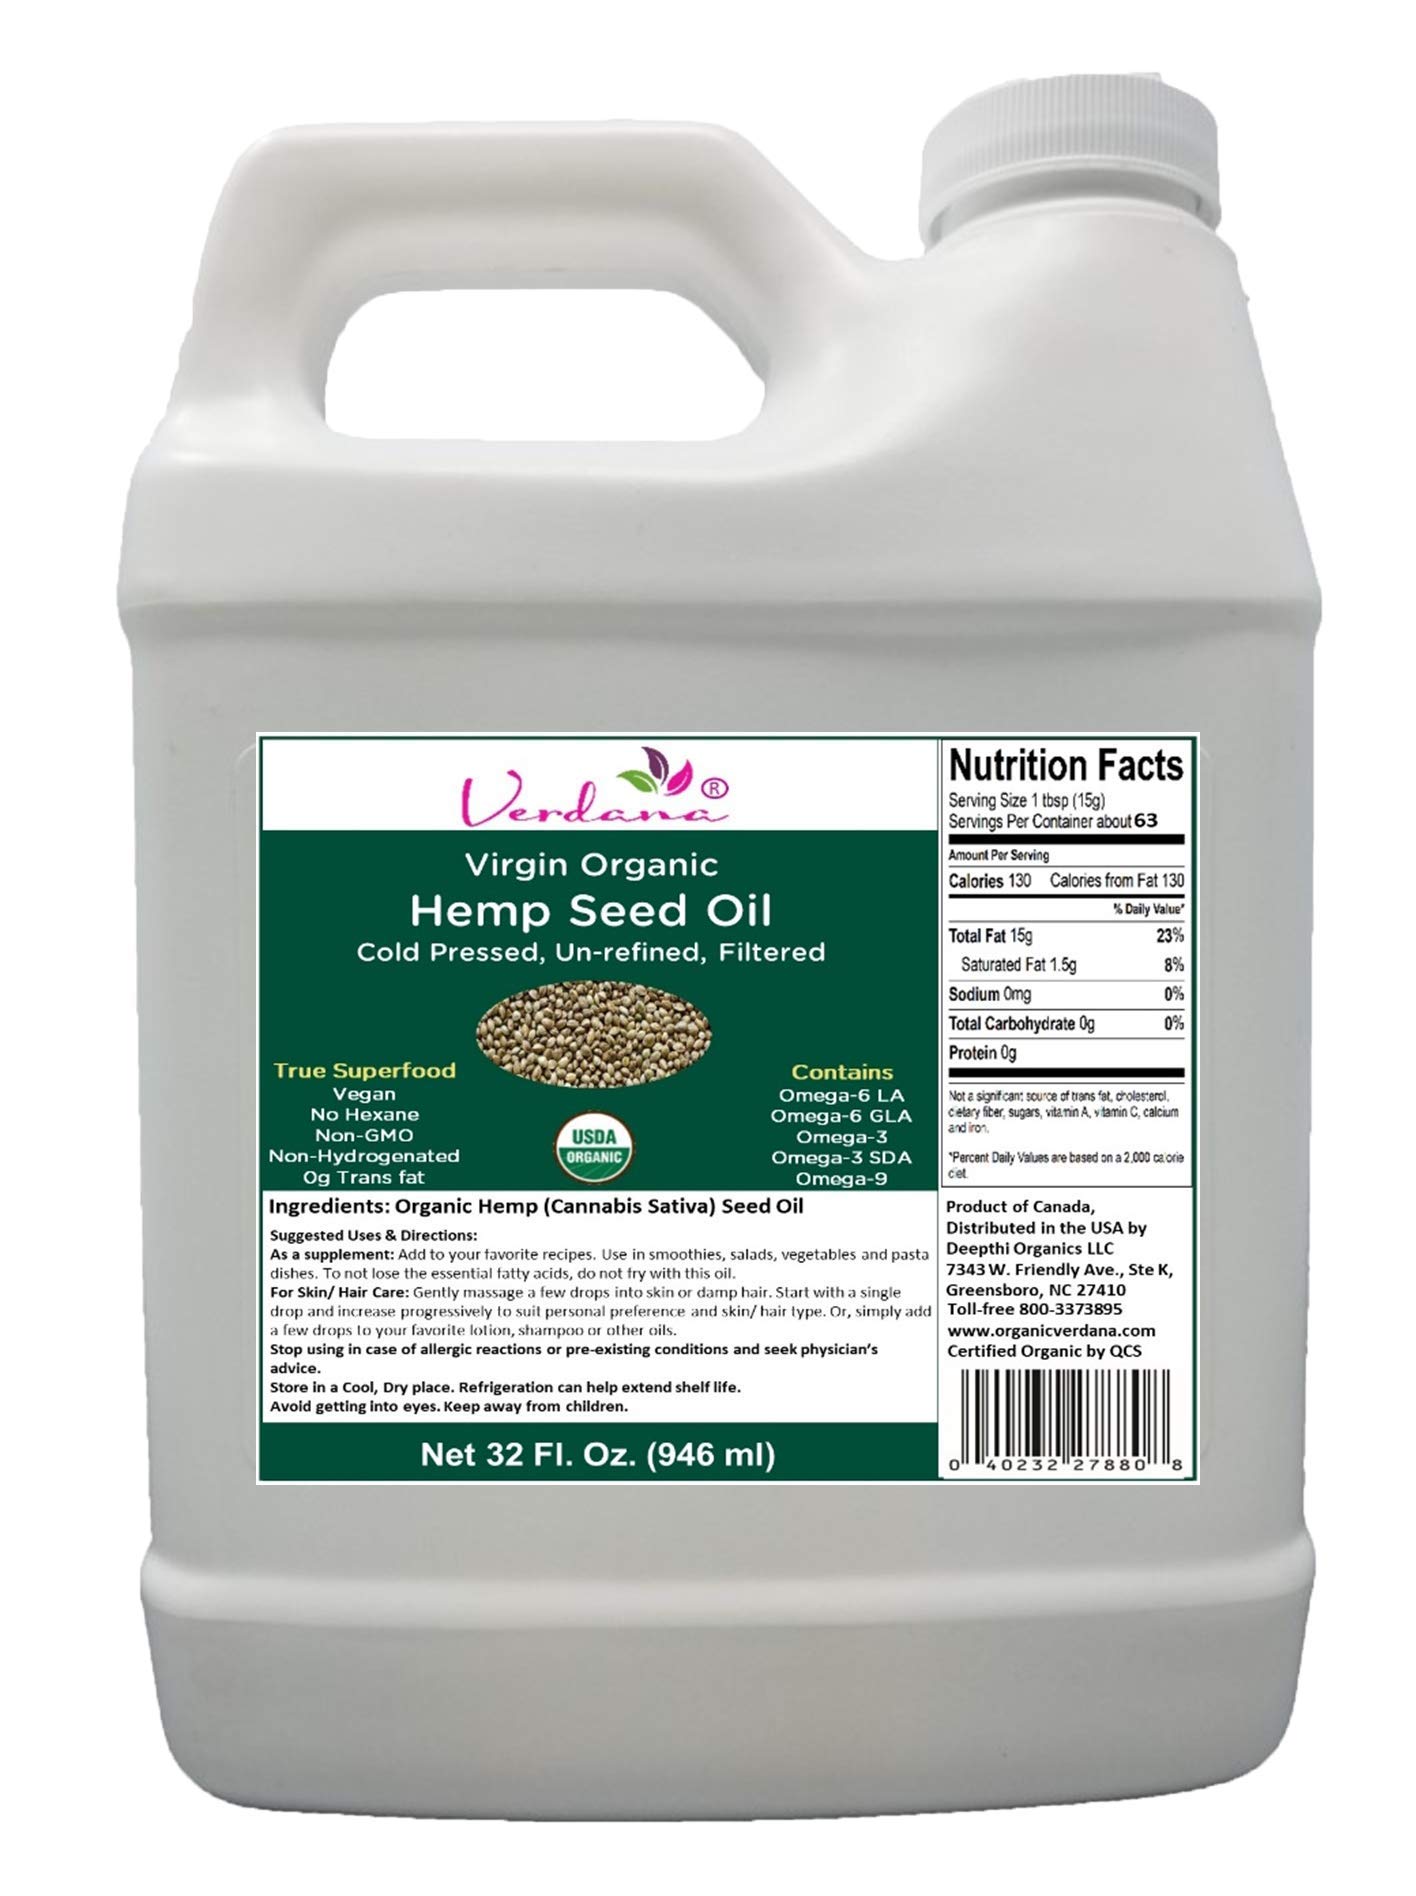 Organic Hemp Seed Oil, Cold Pressed Organic Non GMO, Cold pressed Hemp  Oil, The worlds most effective oil